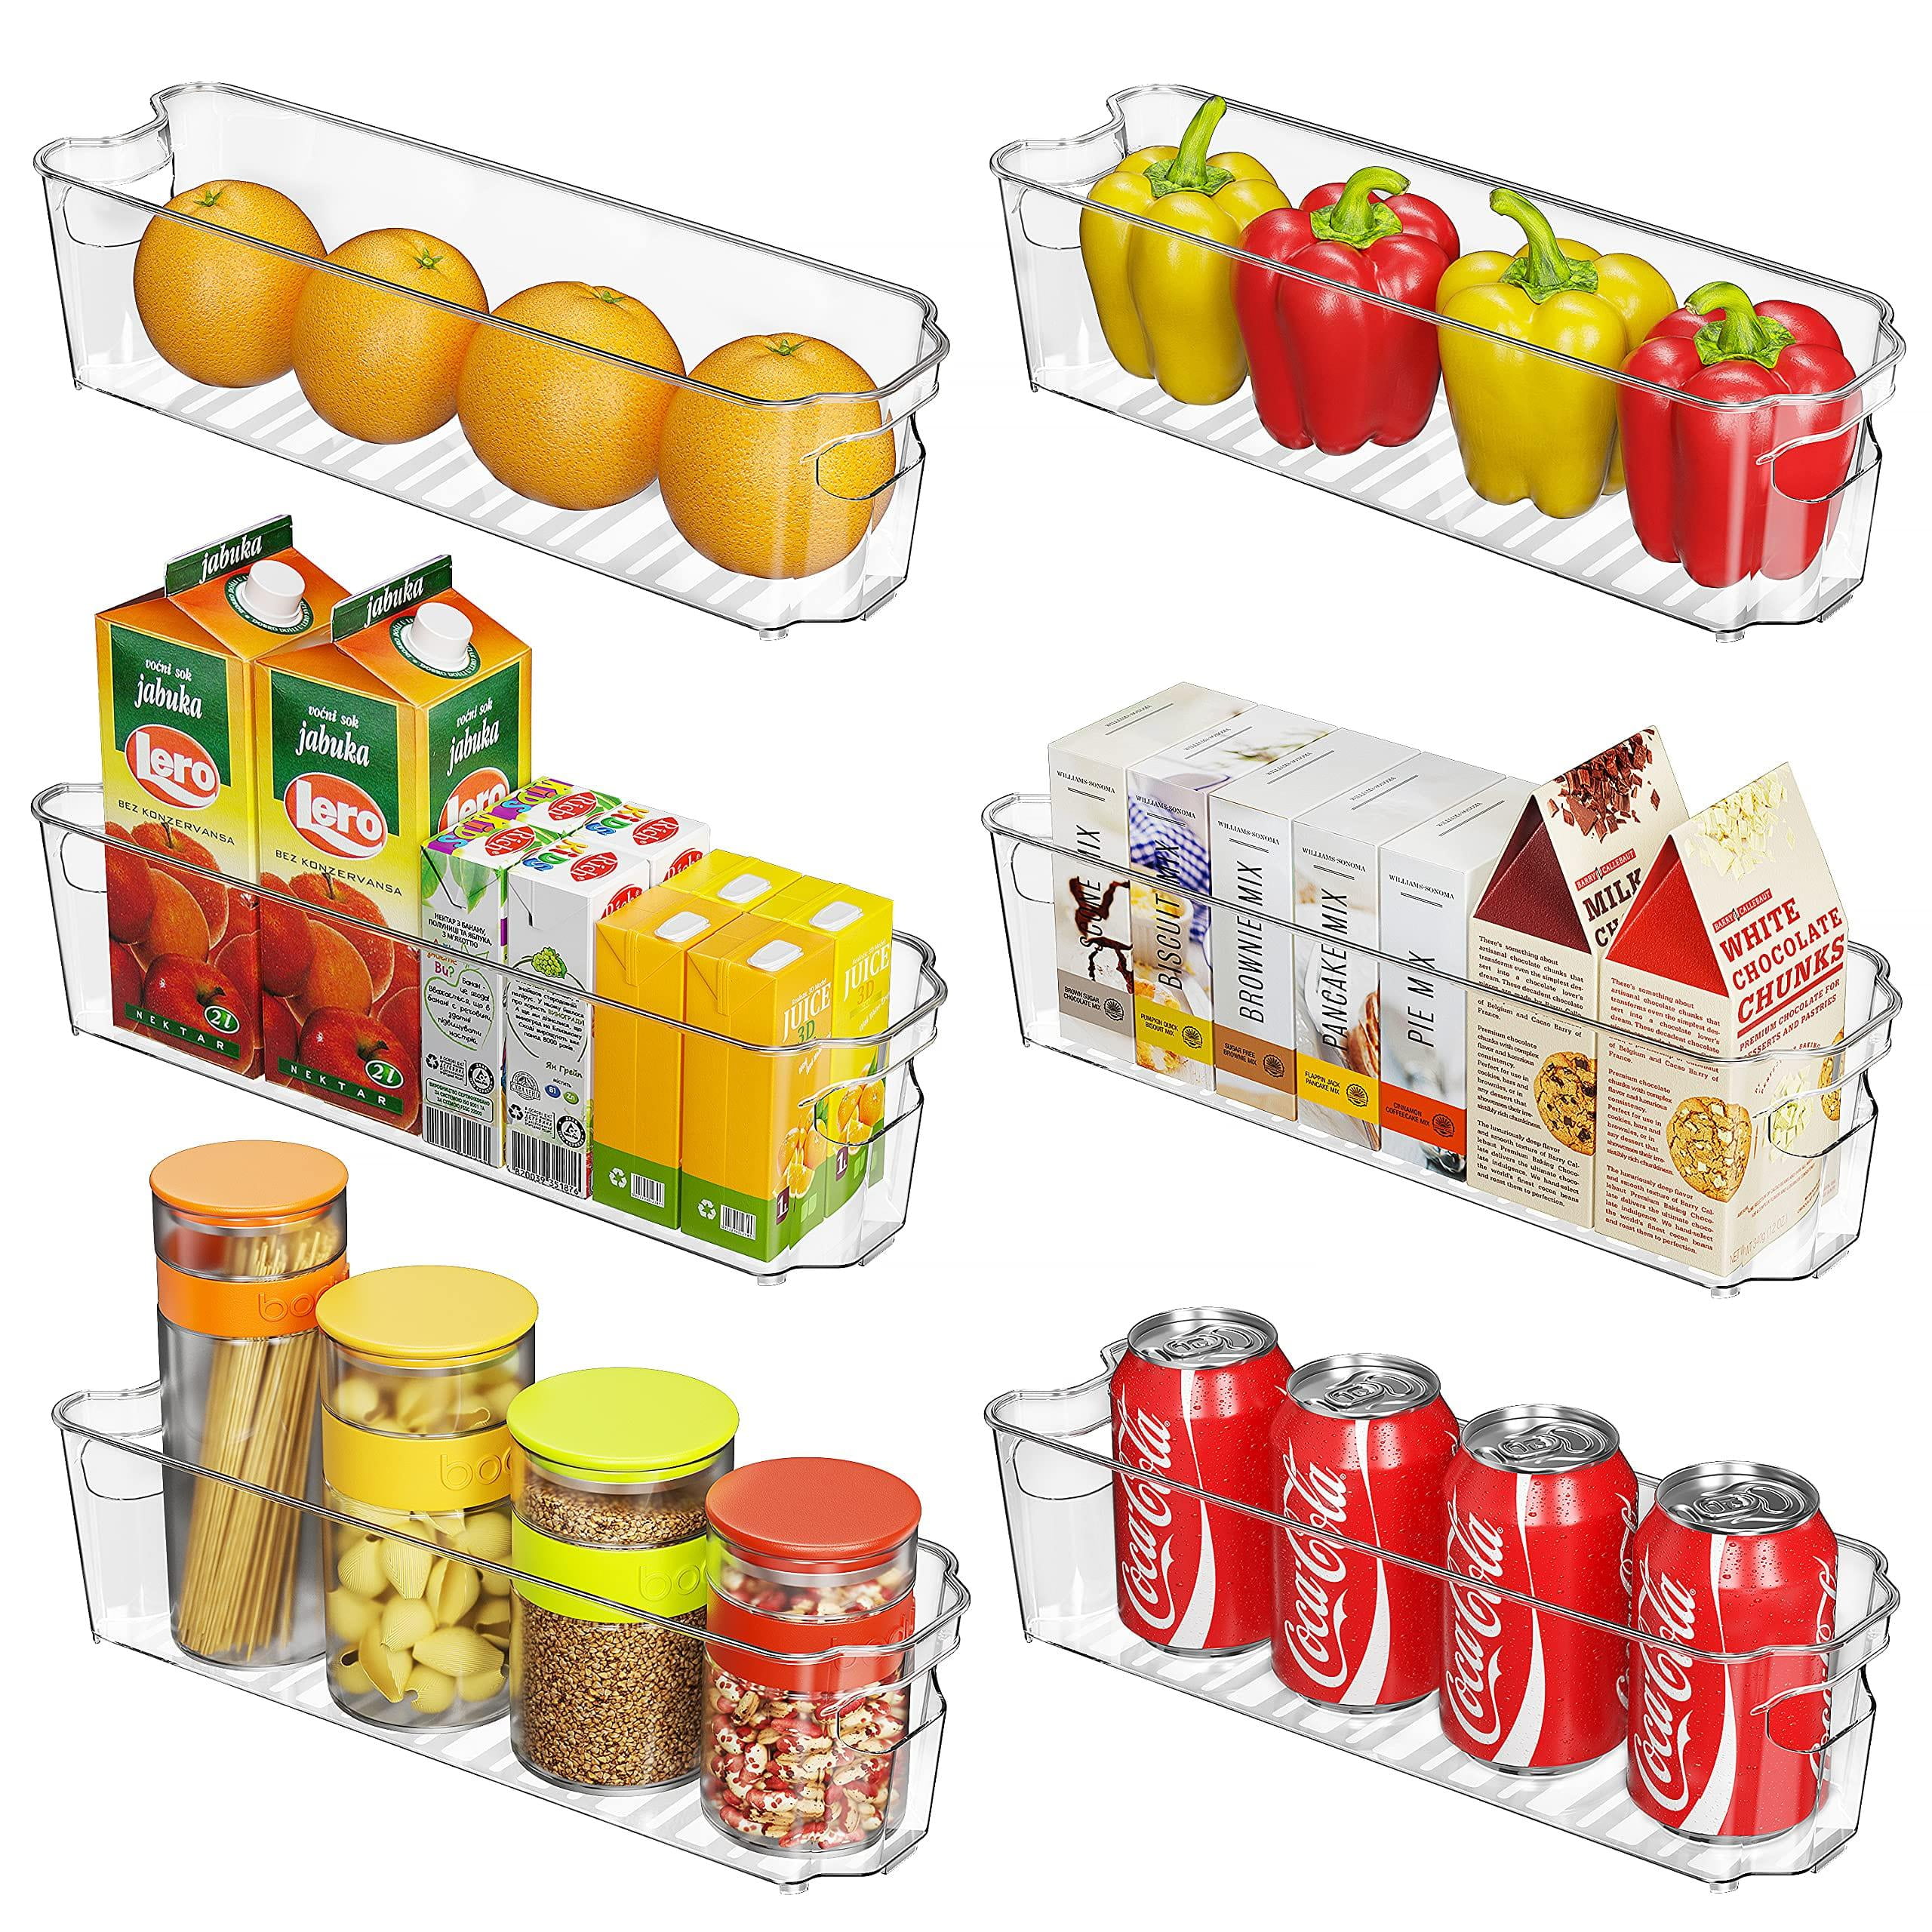 Fullstar Fridge Organisers Bins [Set of 4] Fridge Storage Containers - Clear Fridge Storage Containers with Handles Kitchen Pantry Organizers and